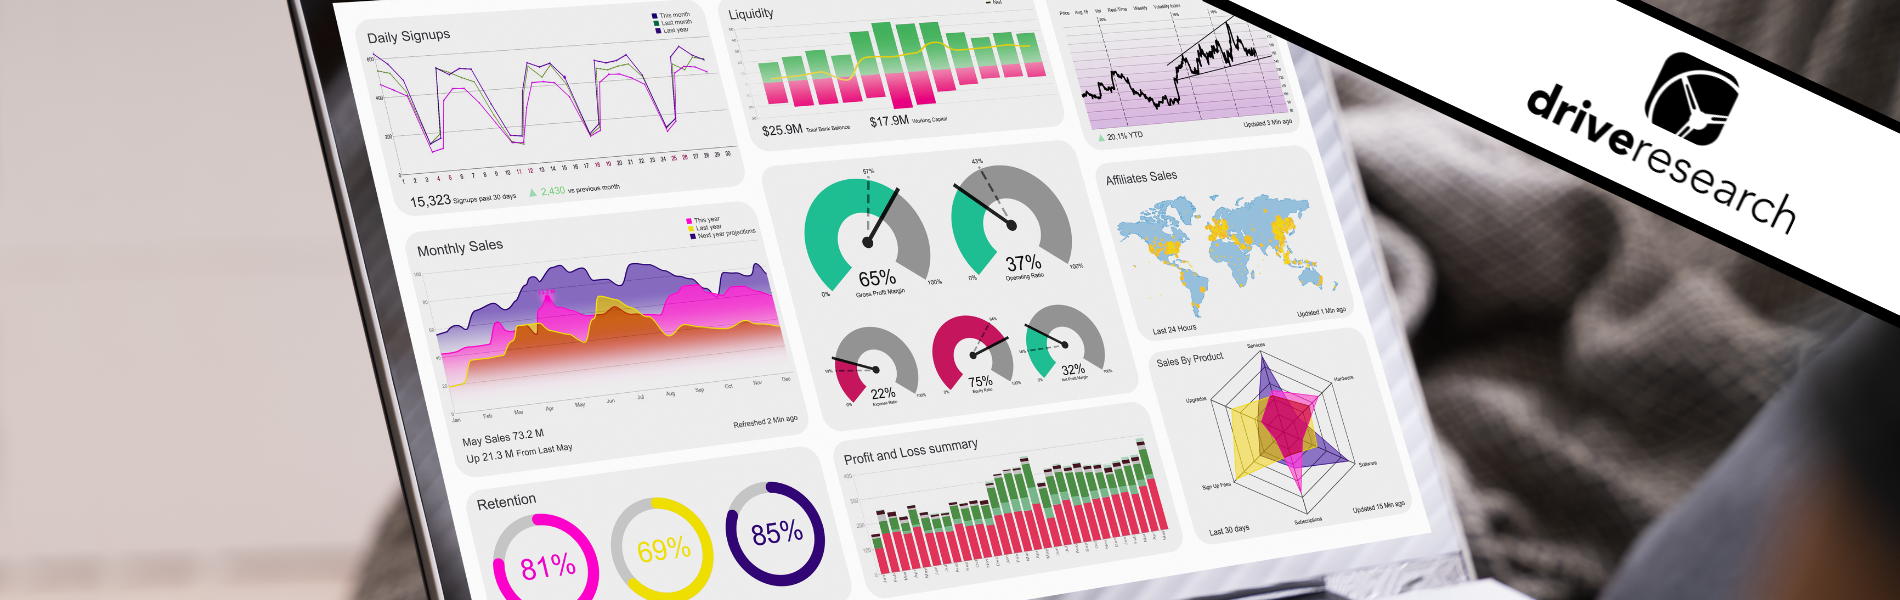 Online KPI Analytics Business Graphs On Computer